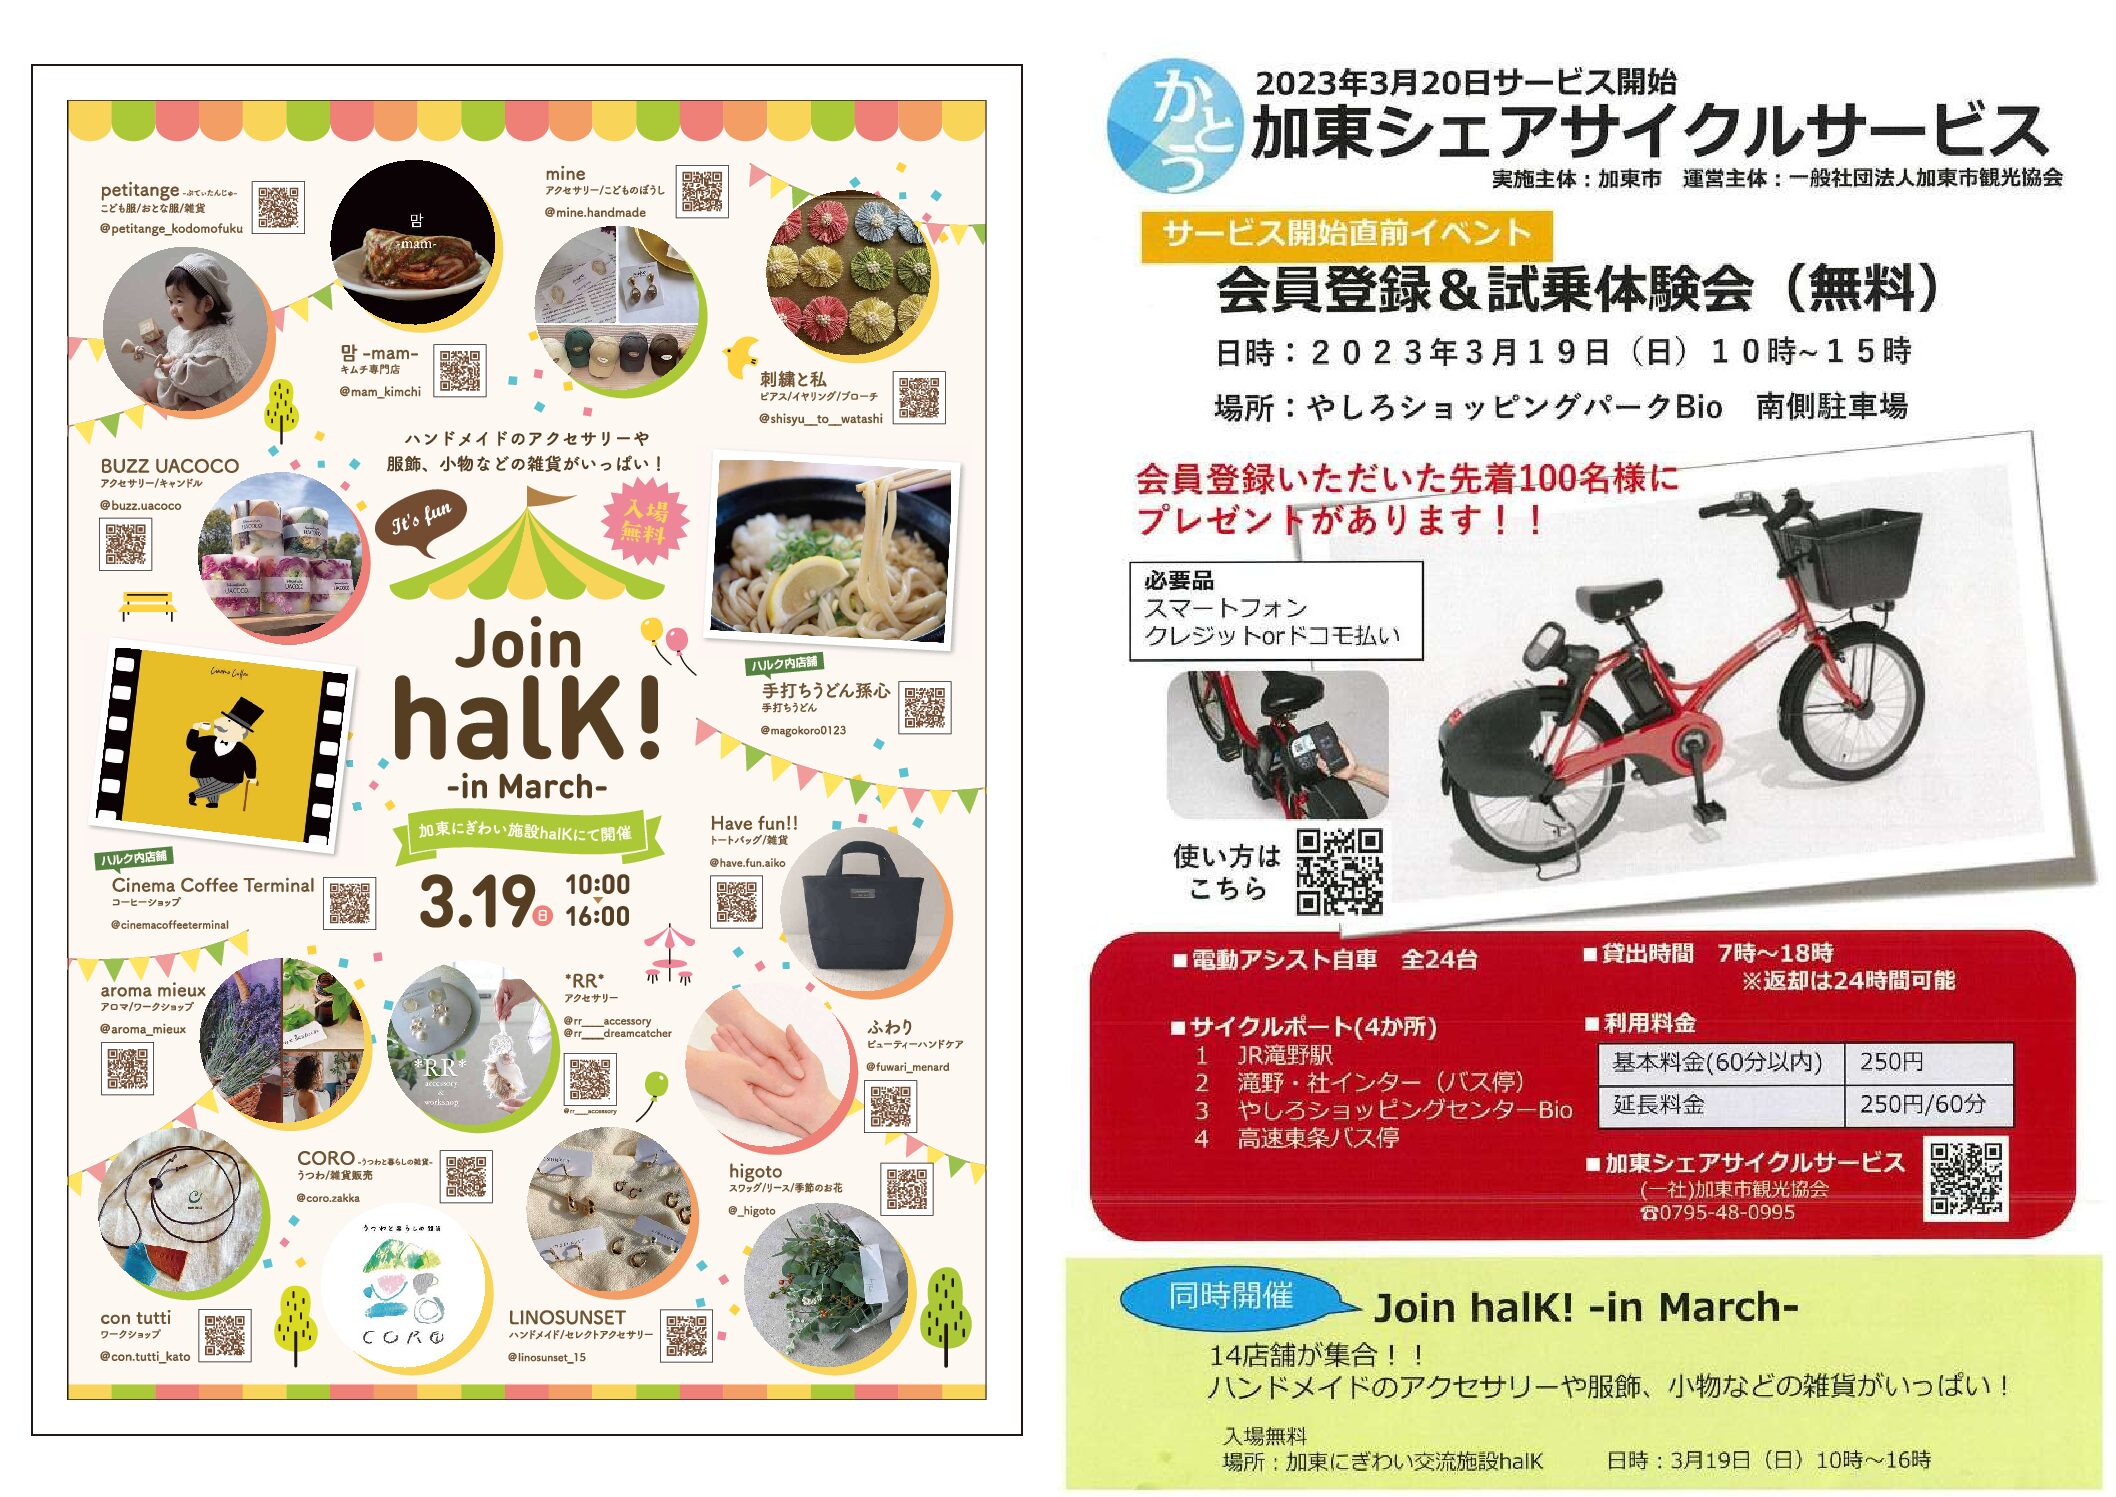 『Join halK!-in March-』『加東シェアサイクルサービス開始イベント』